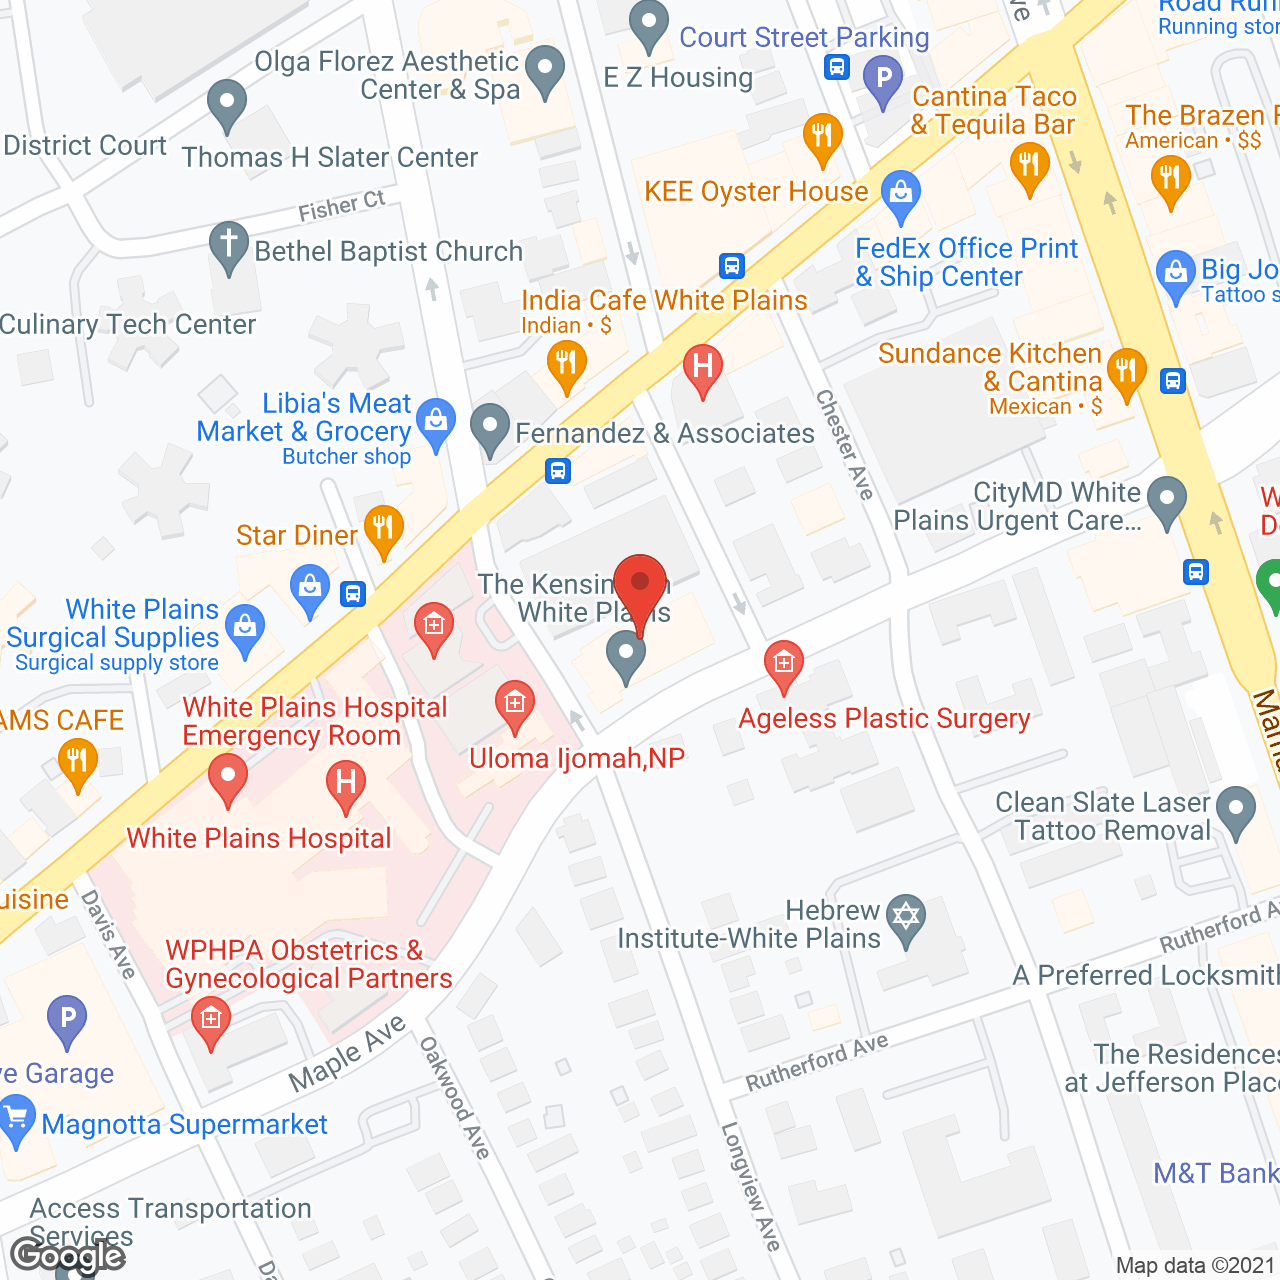 The Kensington White Plains in google map